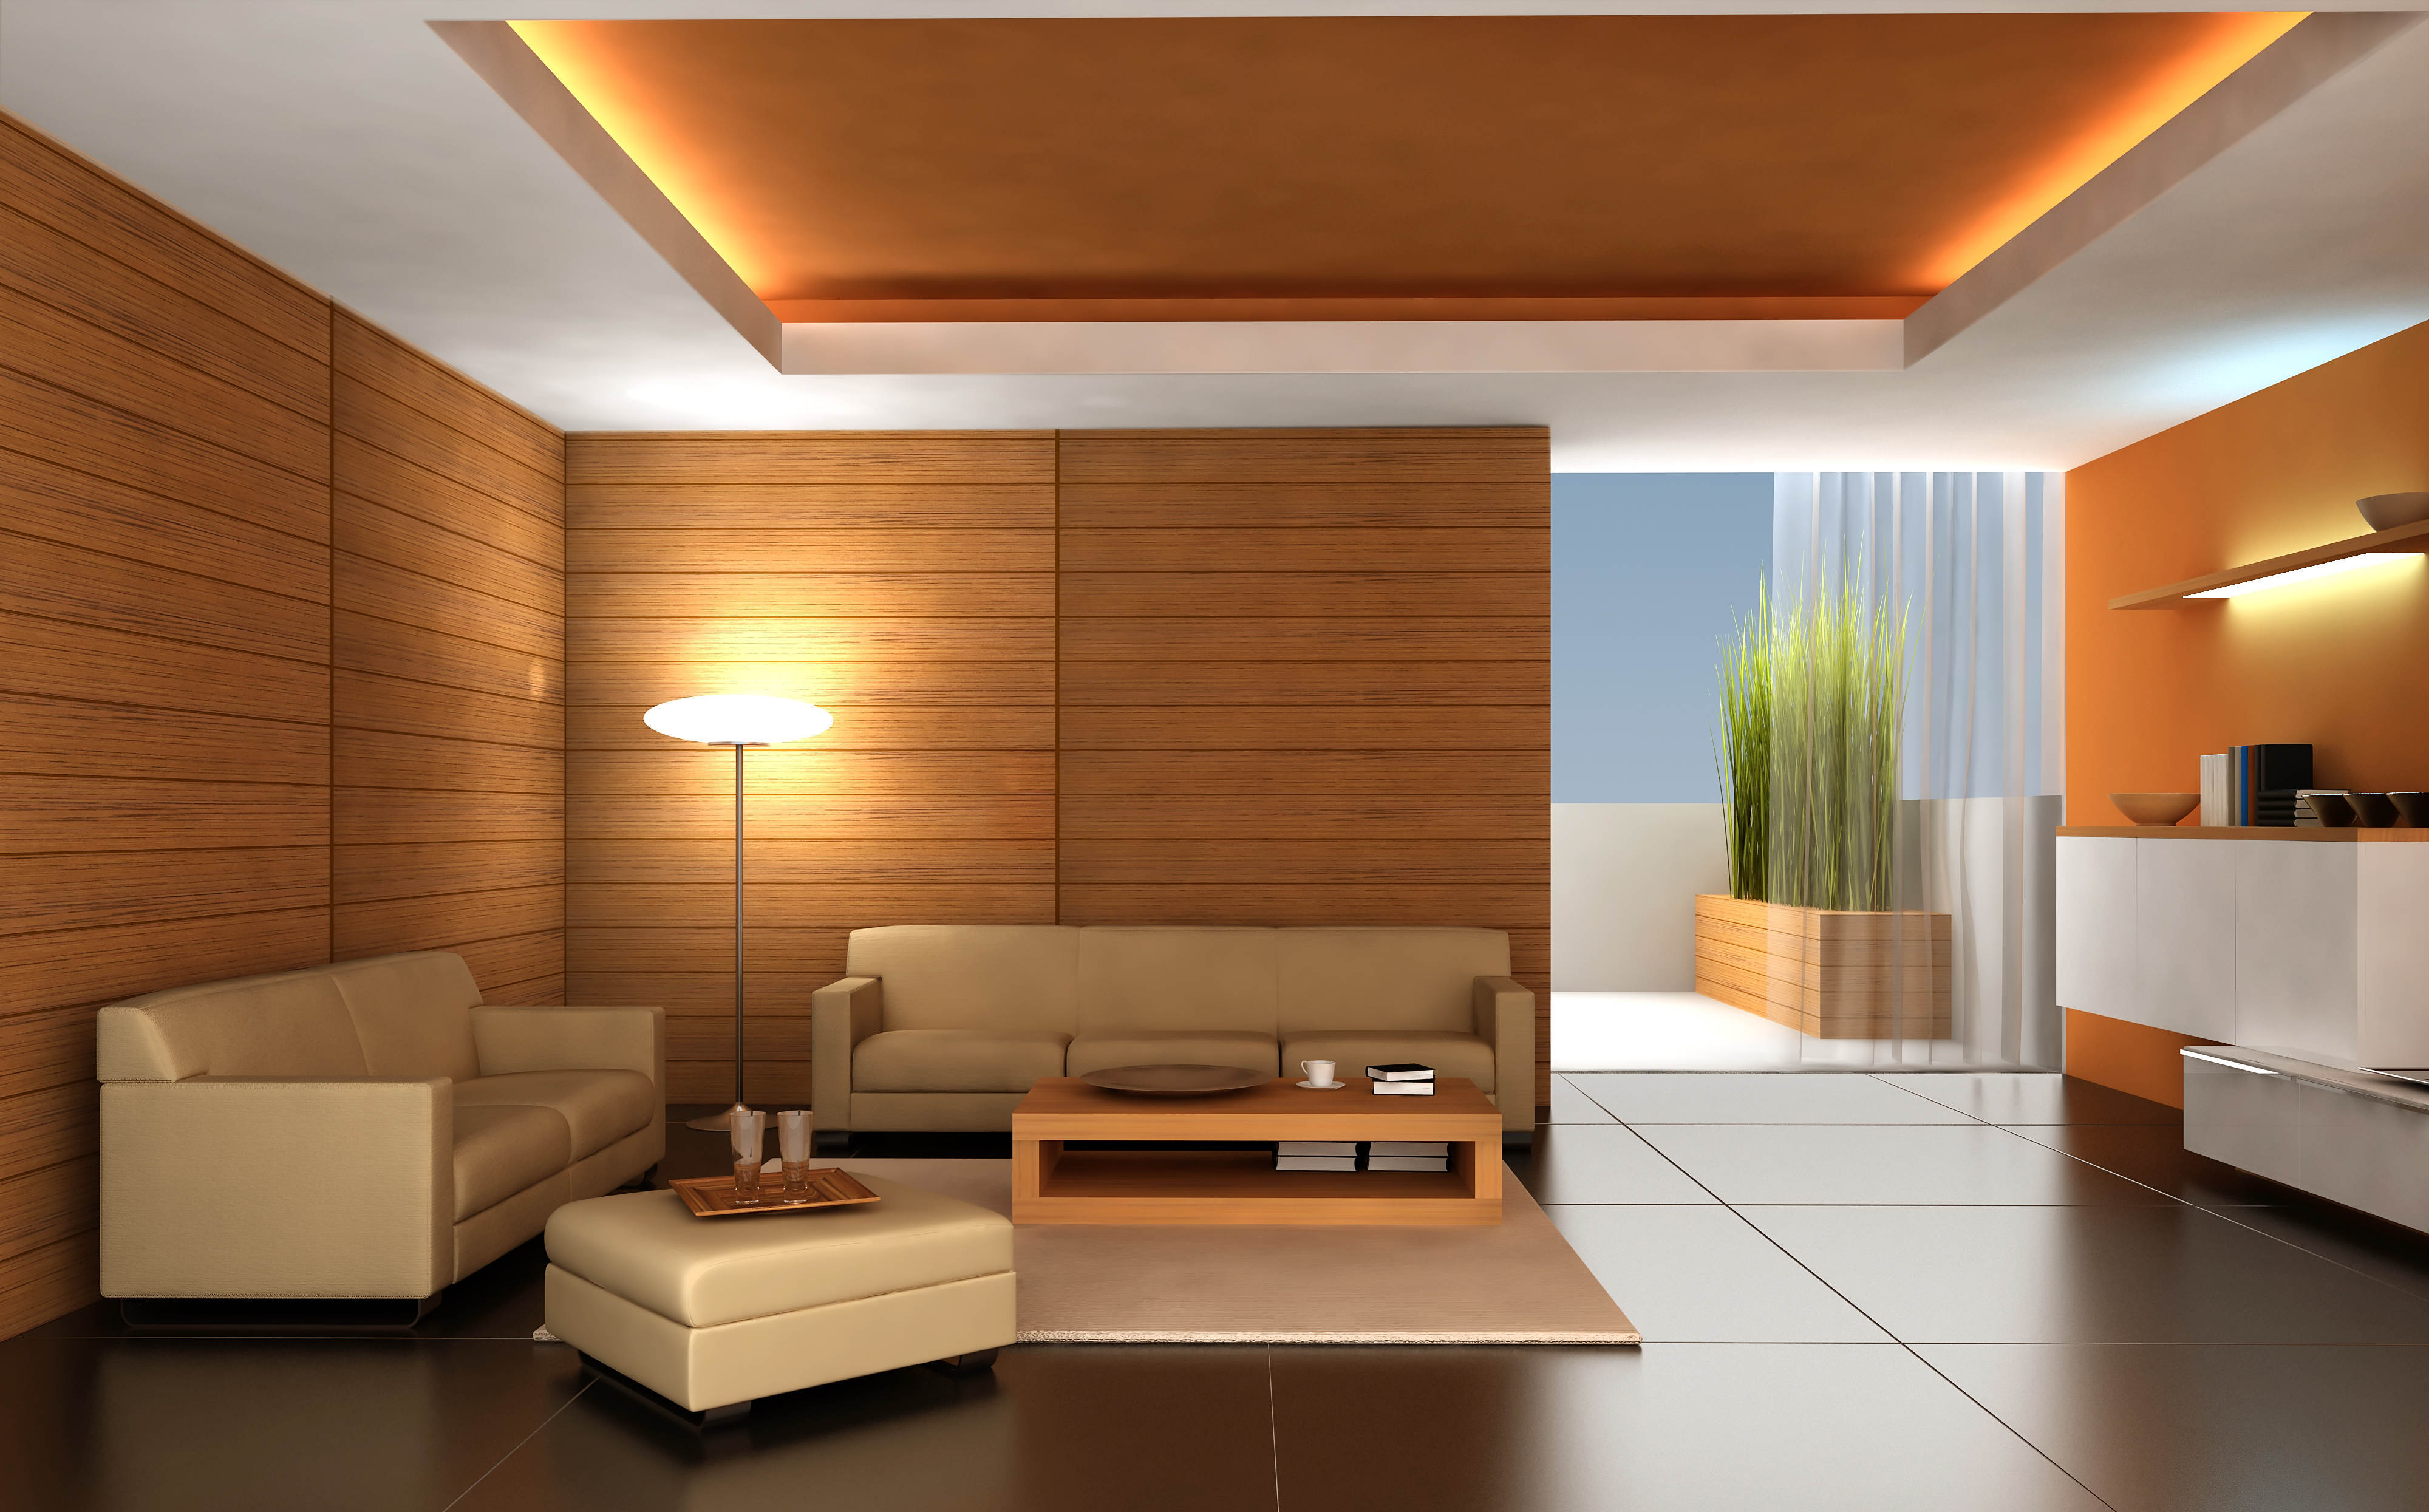 unusual wallpaper for living room,interior design,ceiling,room,living room,furniture